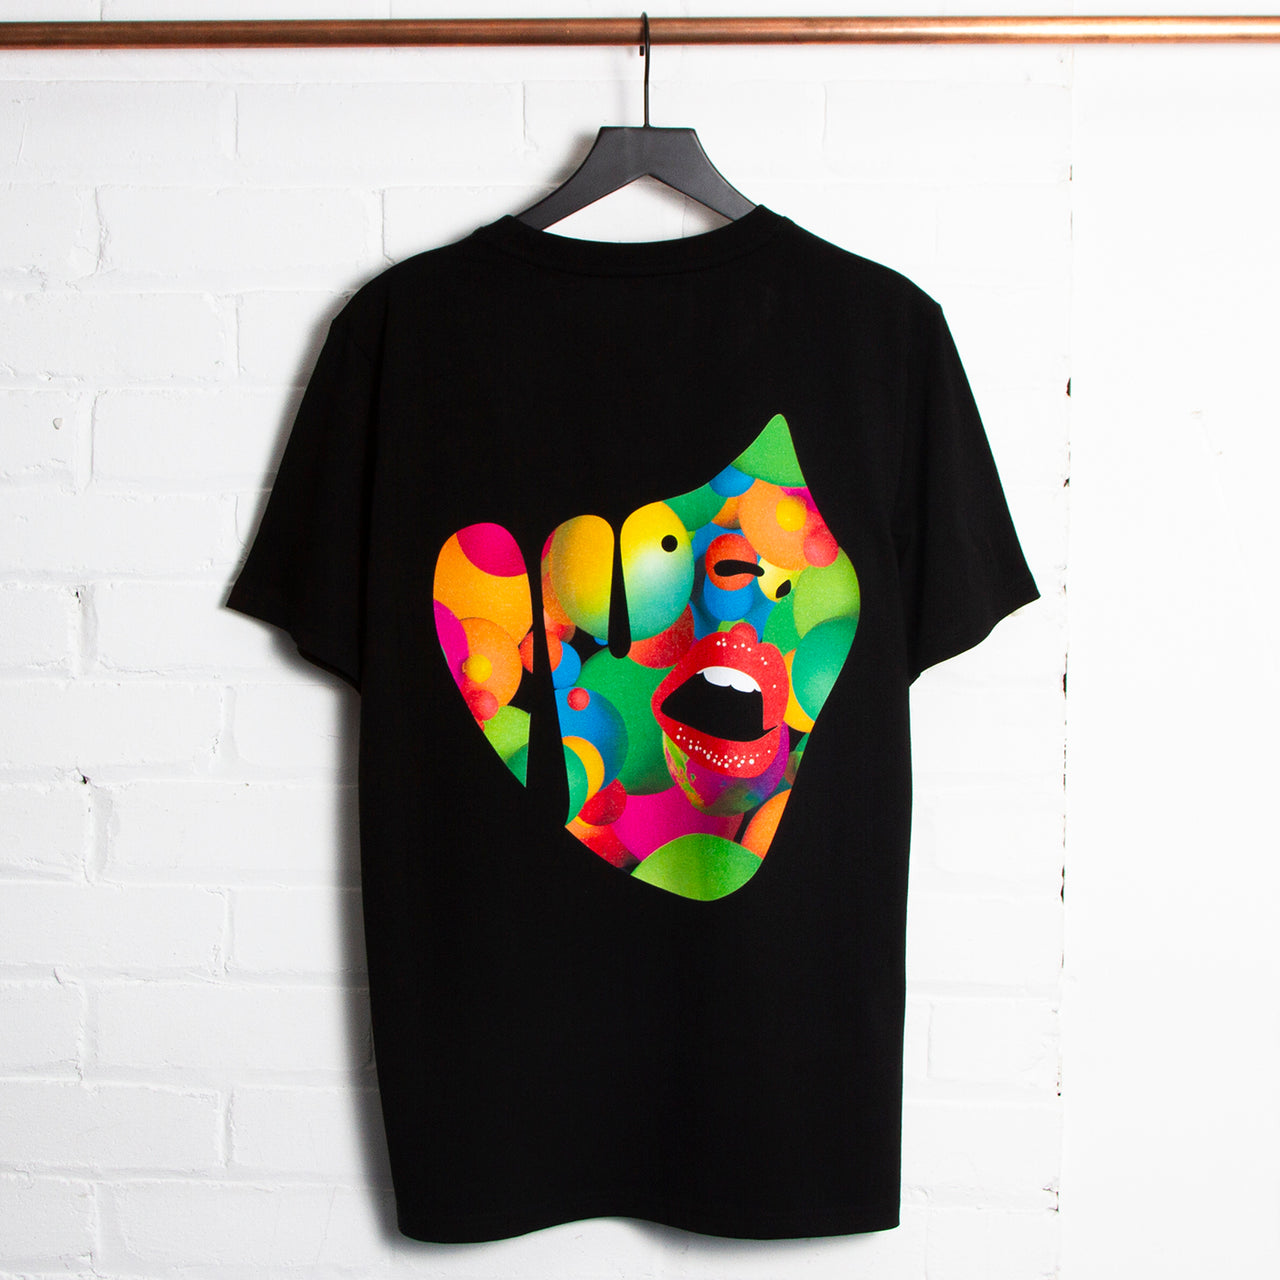 Droplet Face 008 Back Print - Tshirt - Black